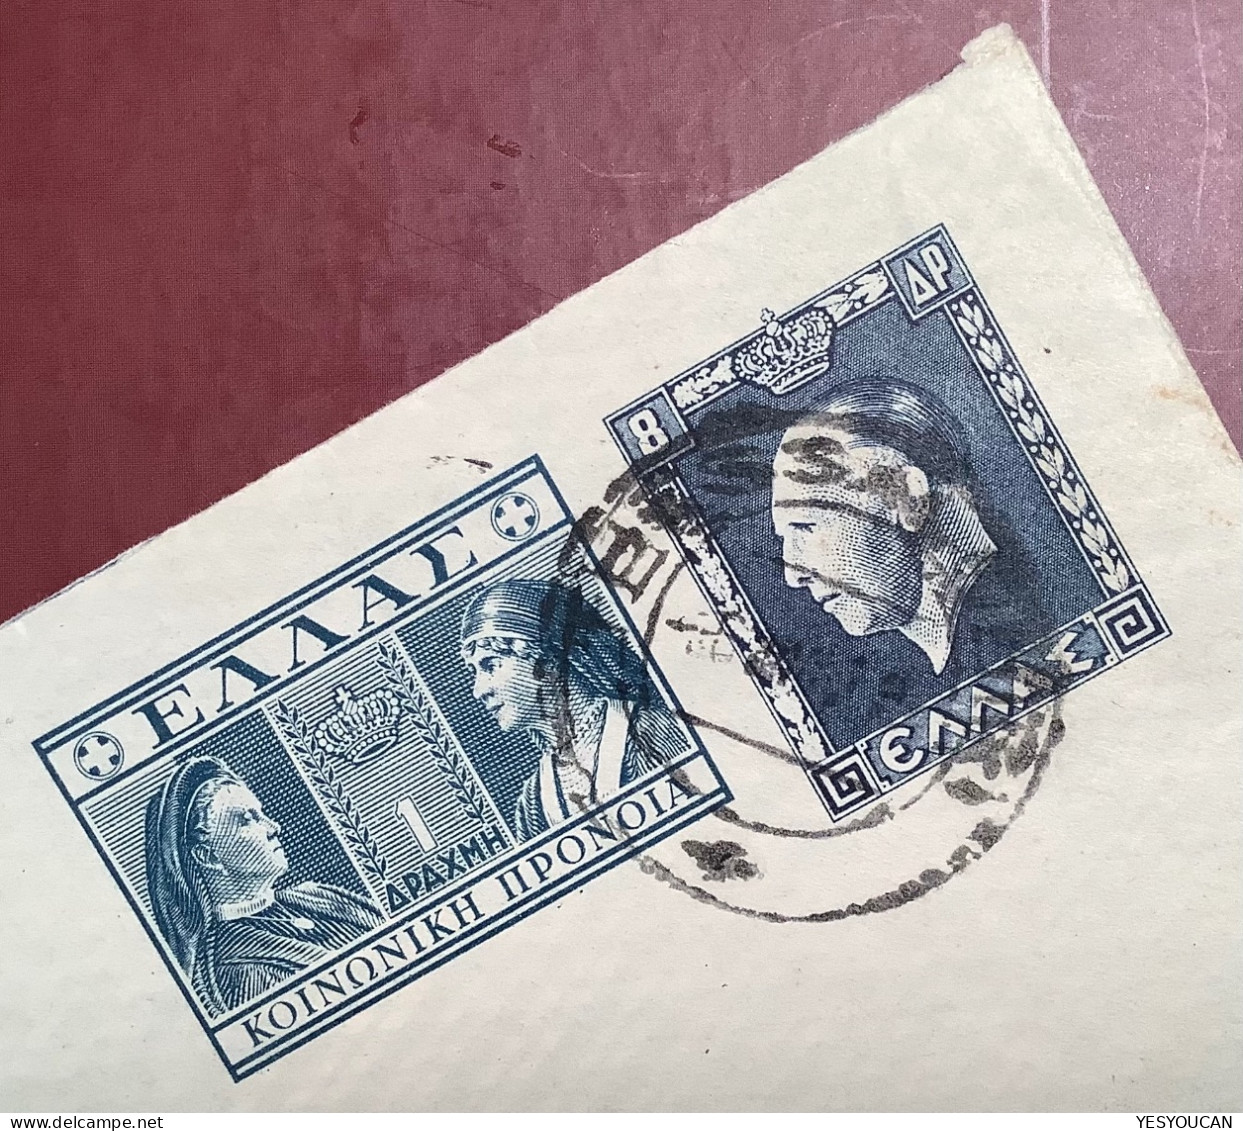 Greece 1939 1dr+8dr Postal Stationery Envelope Mi. U5 Censored Thessaloniki>E.Corboz, Chef Police Genève Suisse (WW2 - Enteros Postales